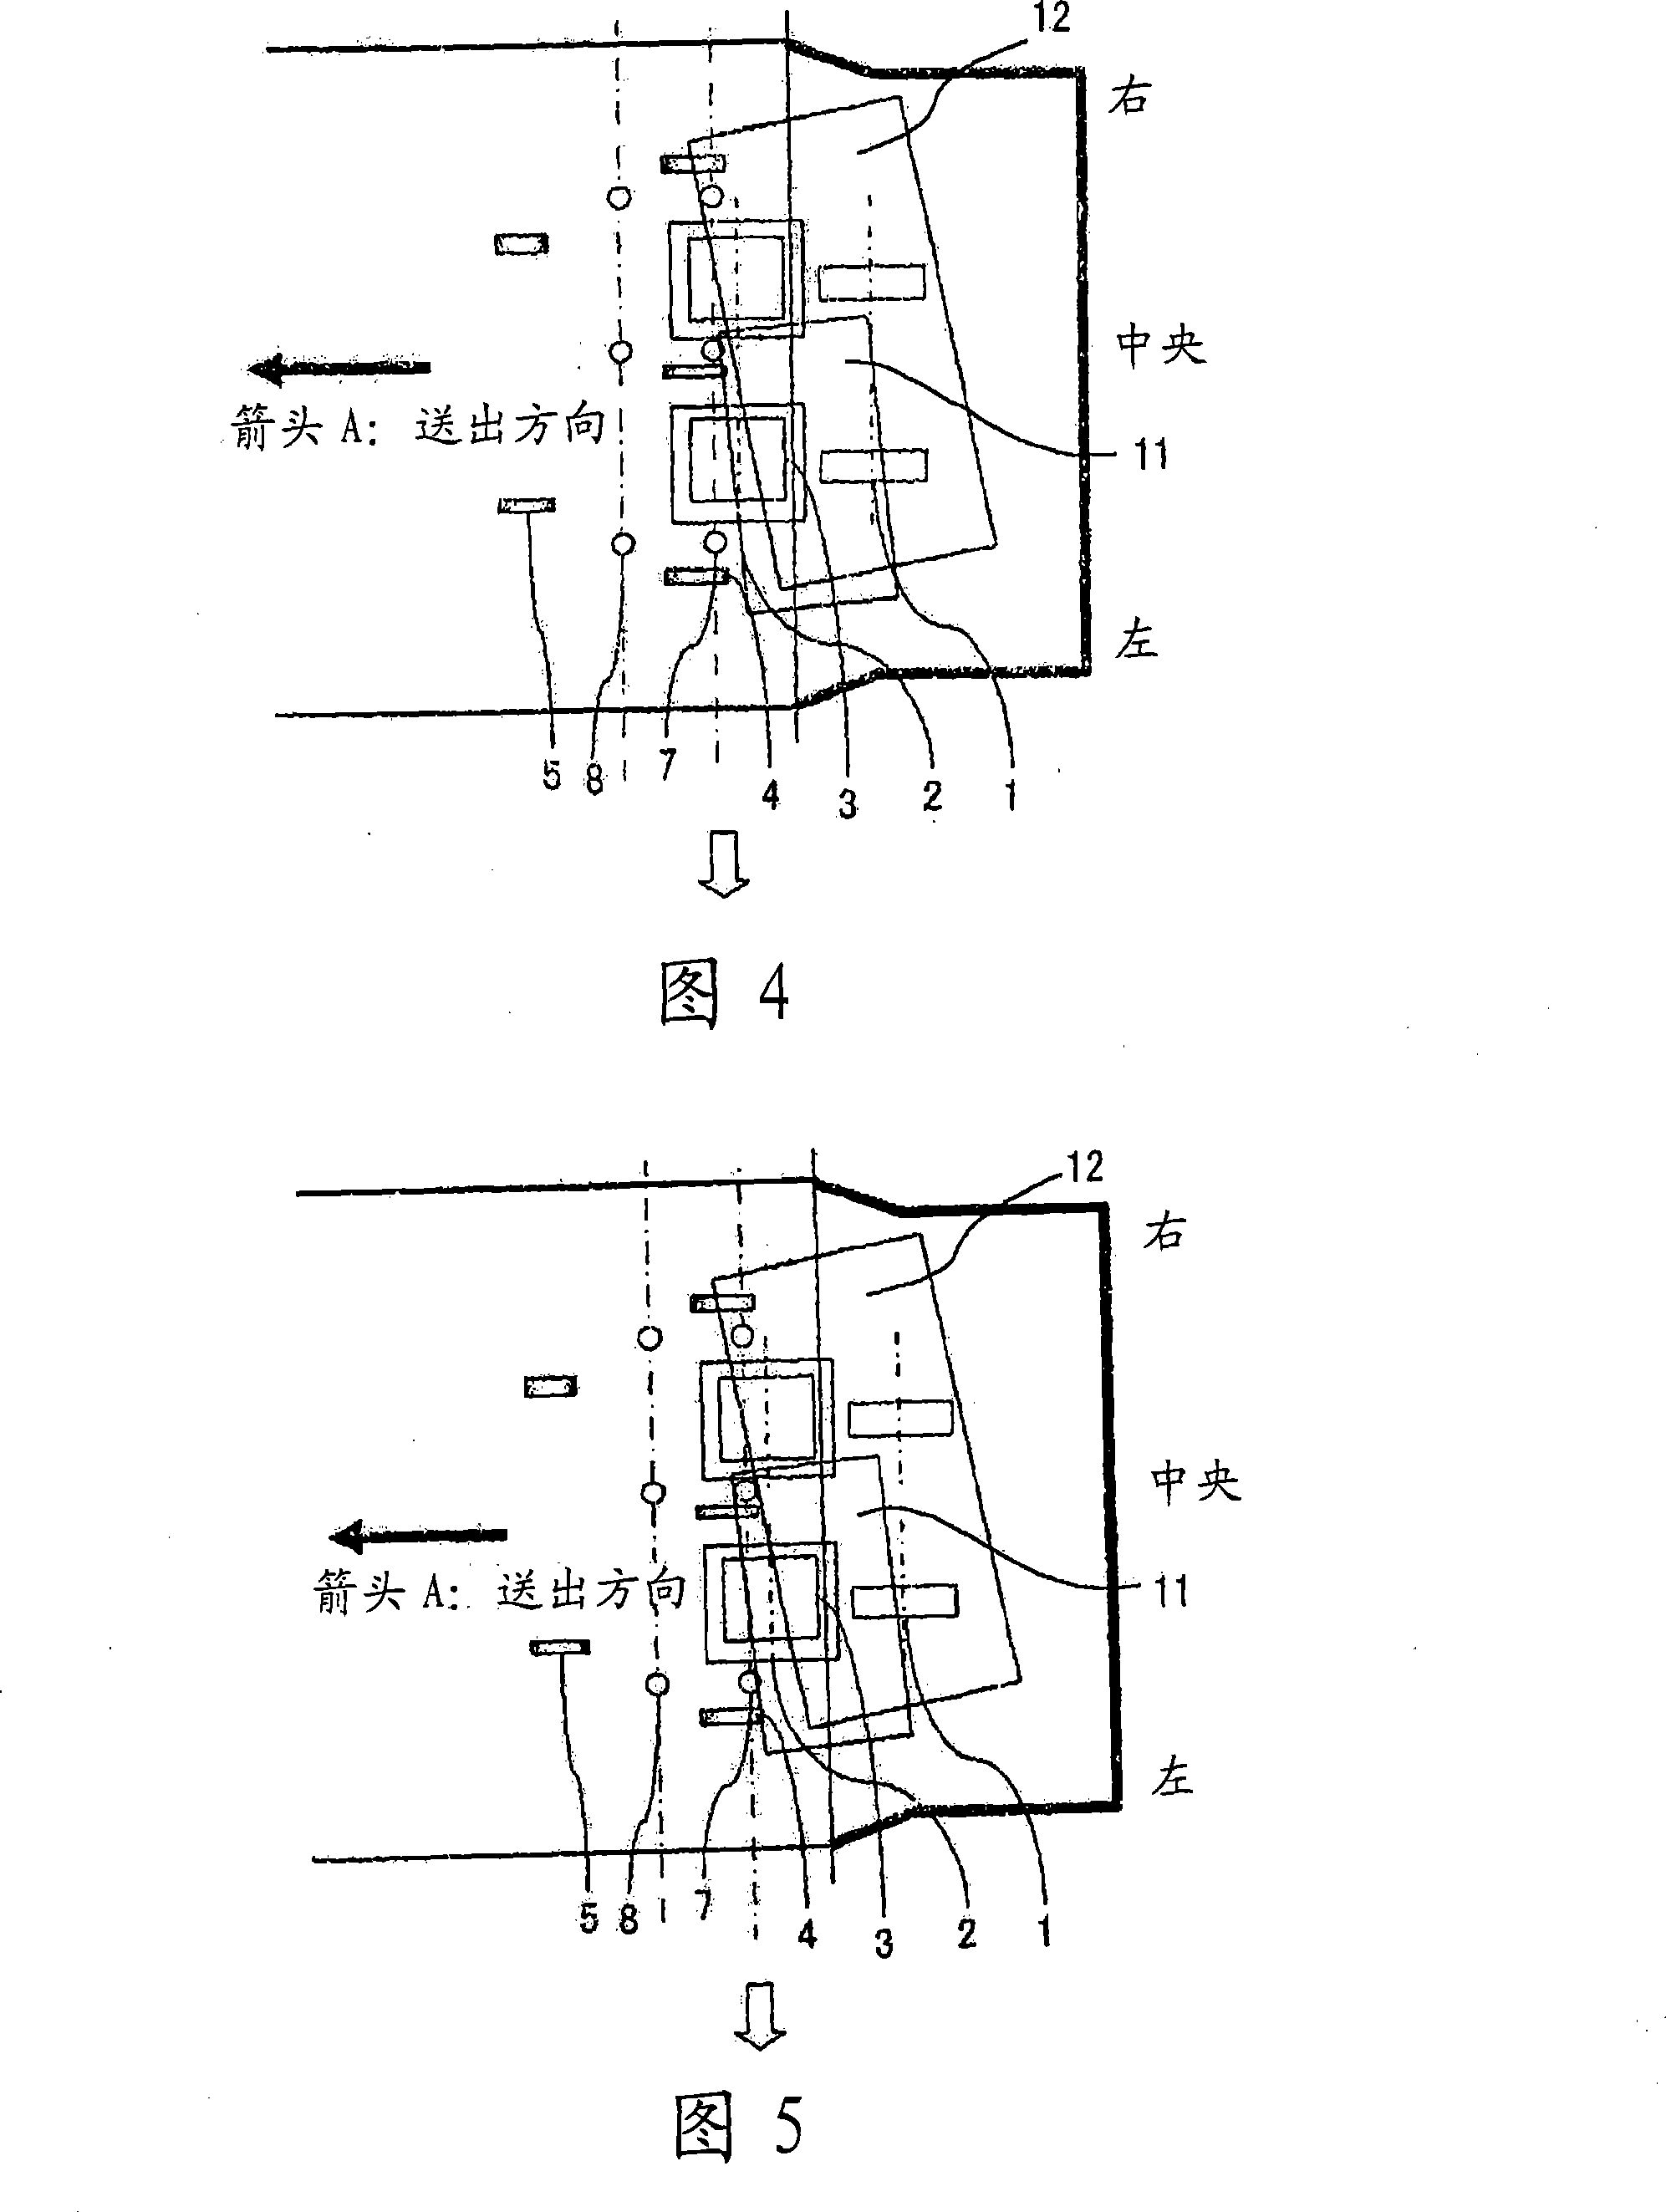 Paper sheet separating mechanism